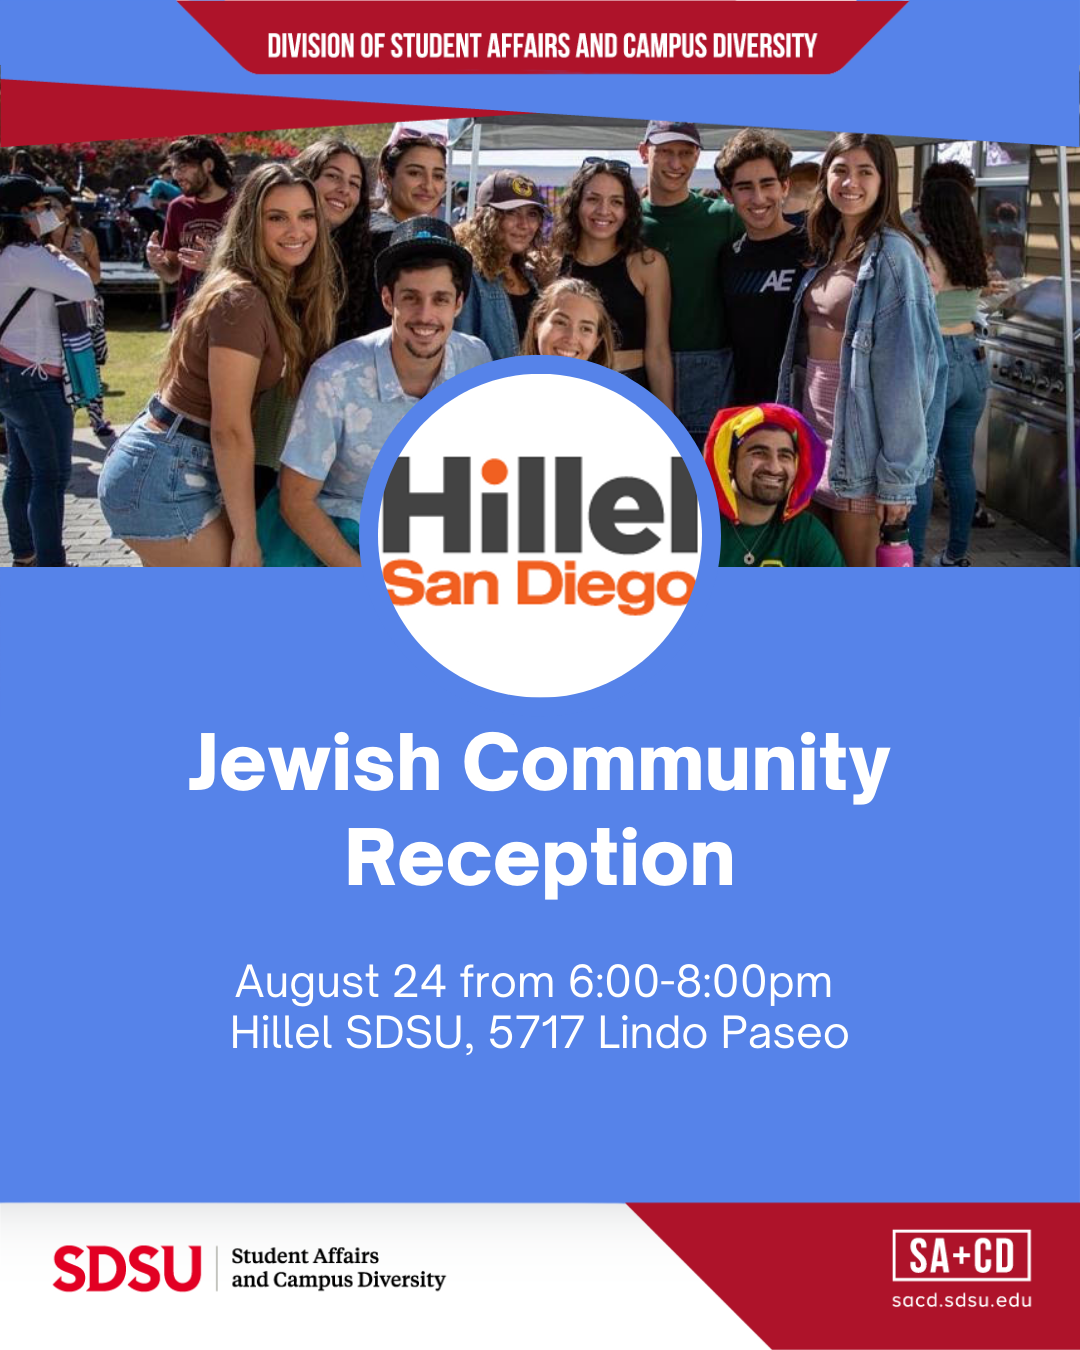 Jewish Community Reception Aug 24, 6-8p at Hillel SDSU